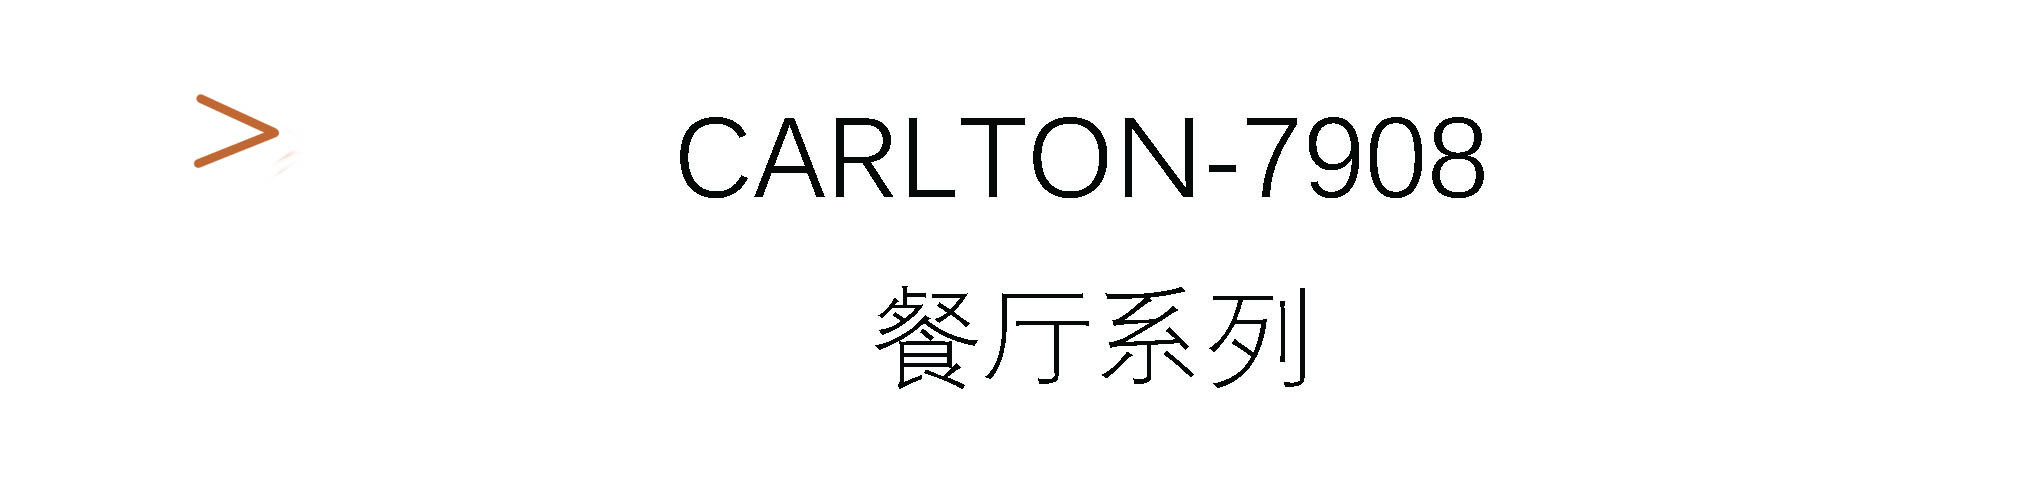 Carlton-7908